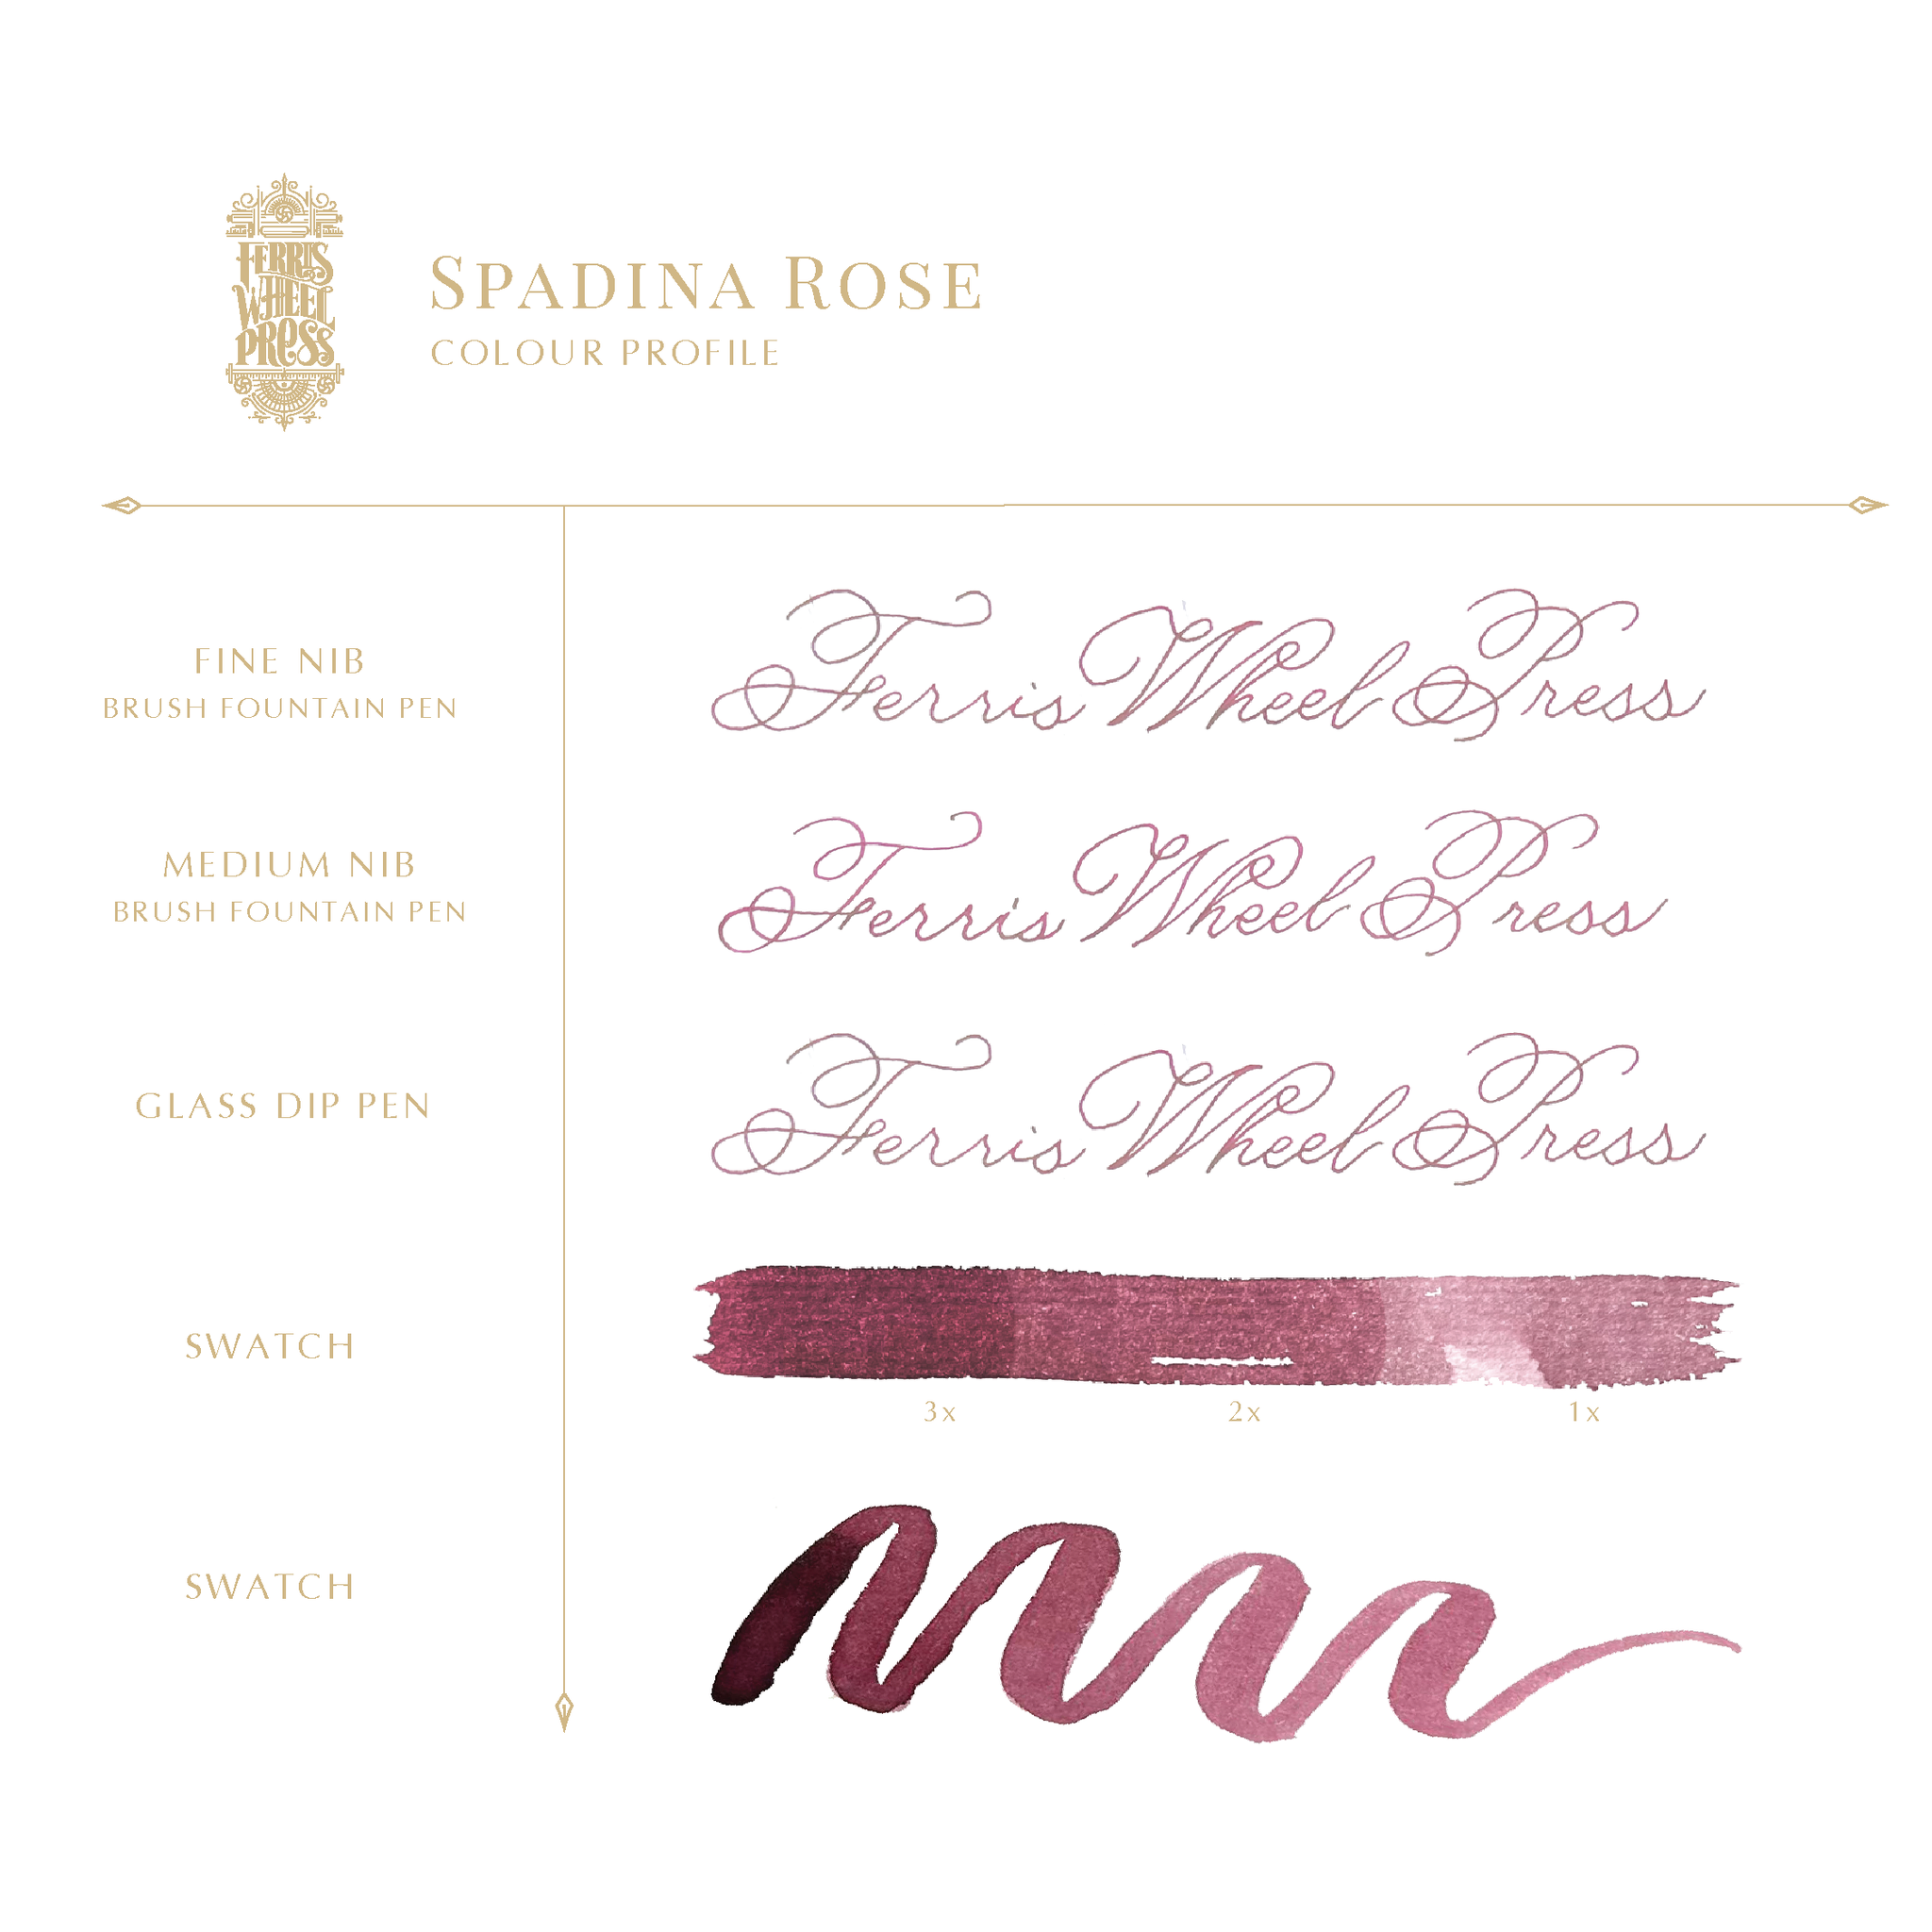 Spadina Rose by Ferris Wheel Press (NEW Fashion District Ink) 38ml